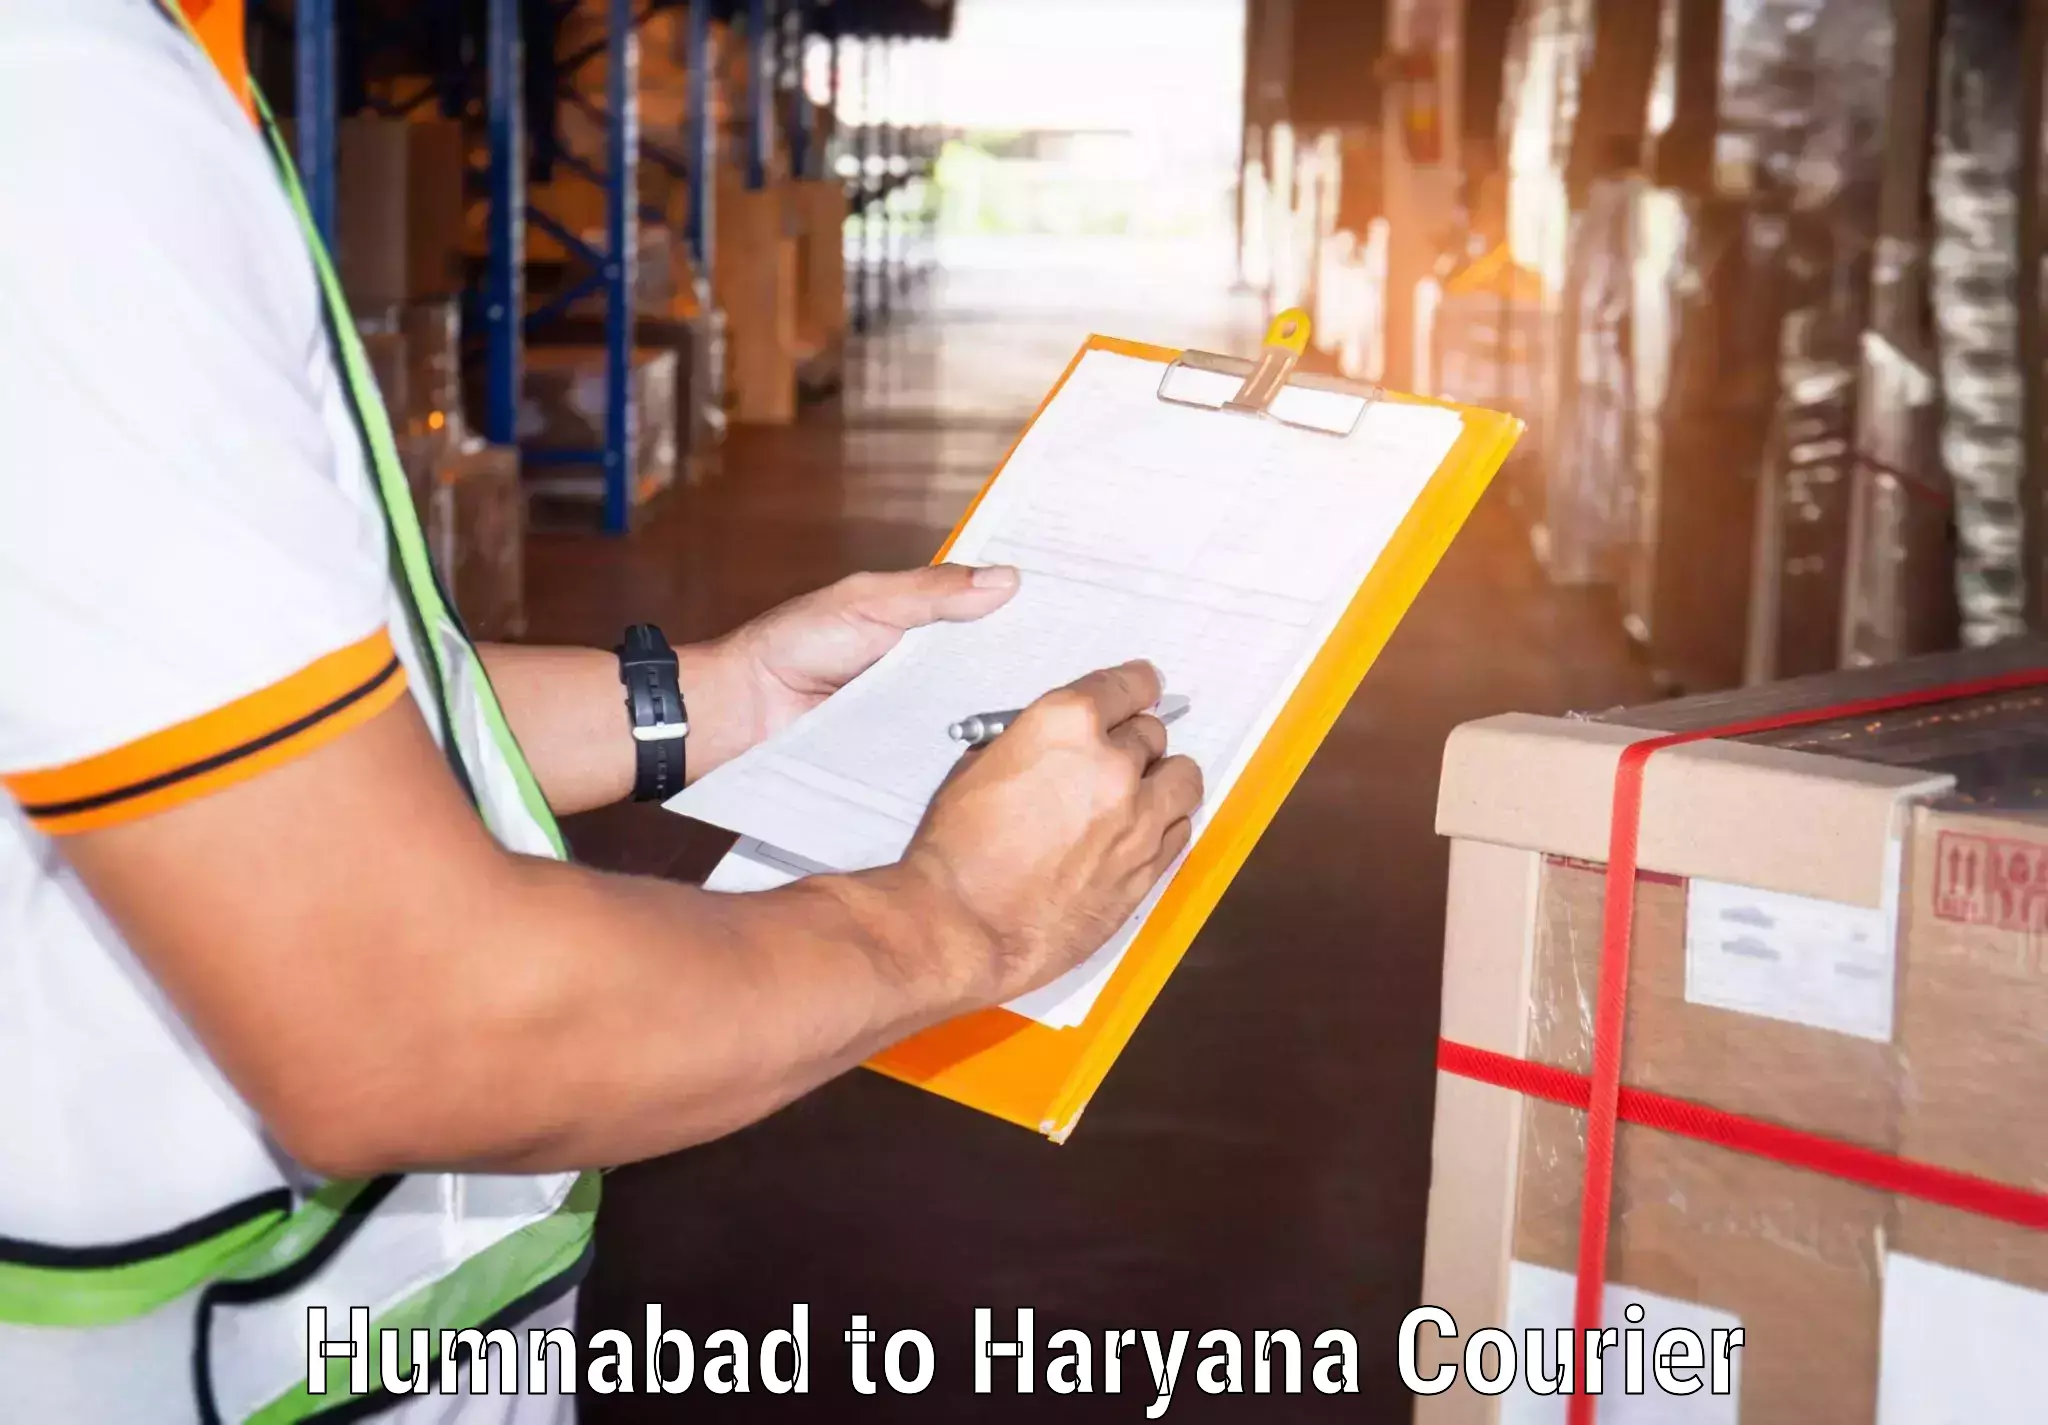 Advanced shipping technology Humnabad to Gurgaon